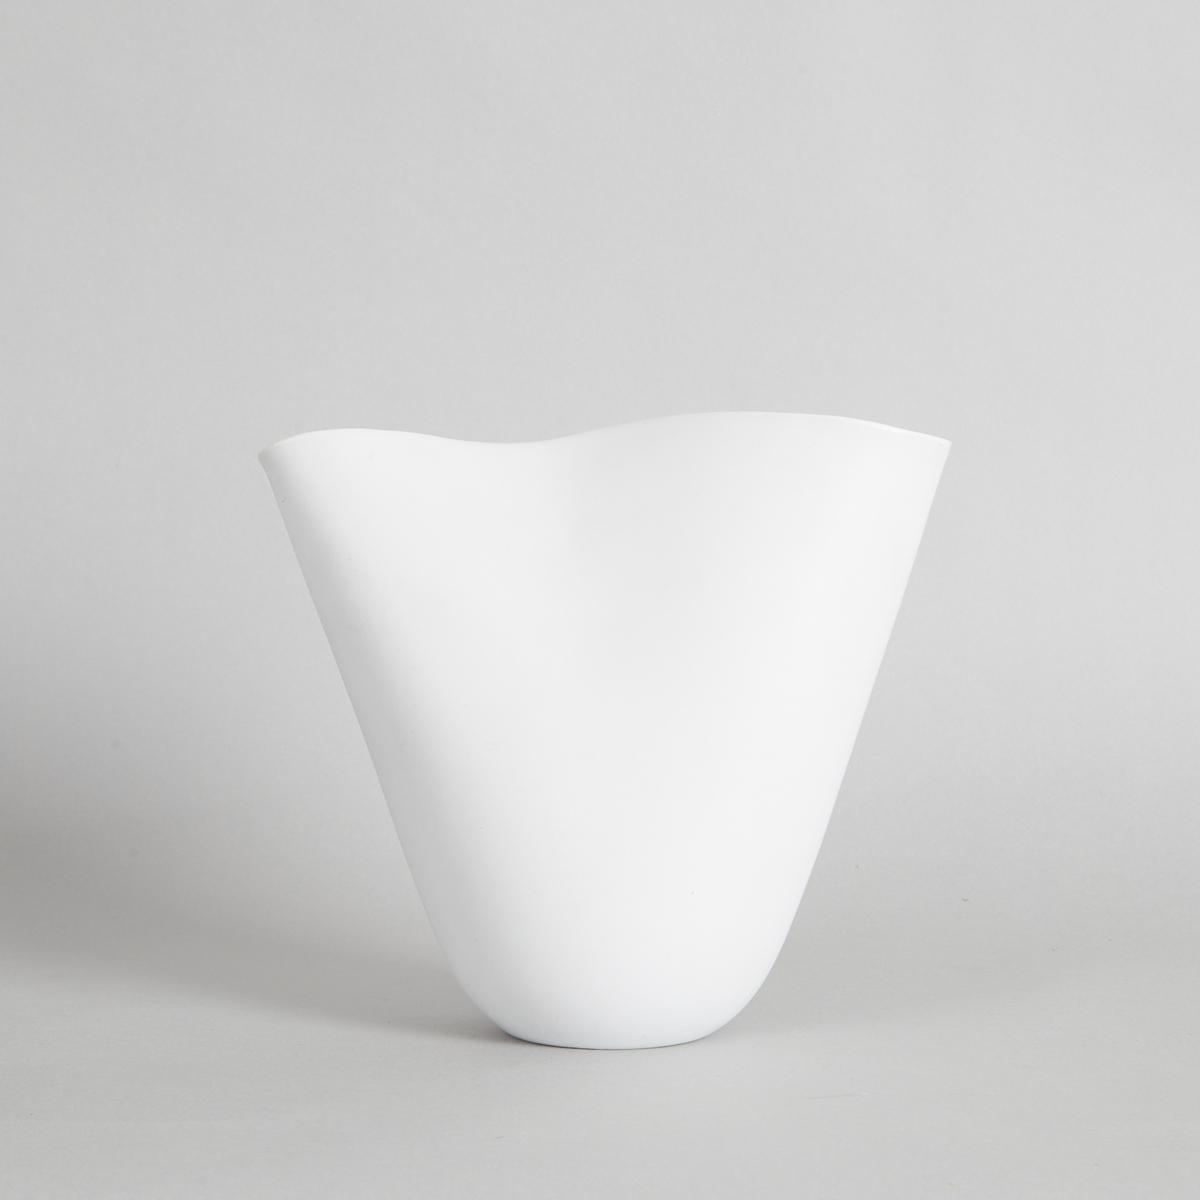 A Rare 'Veckla' Vase Designed by Stig Lindberg for Gustavsberg by Stig Lindberg